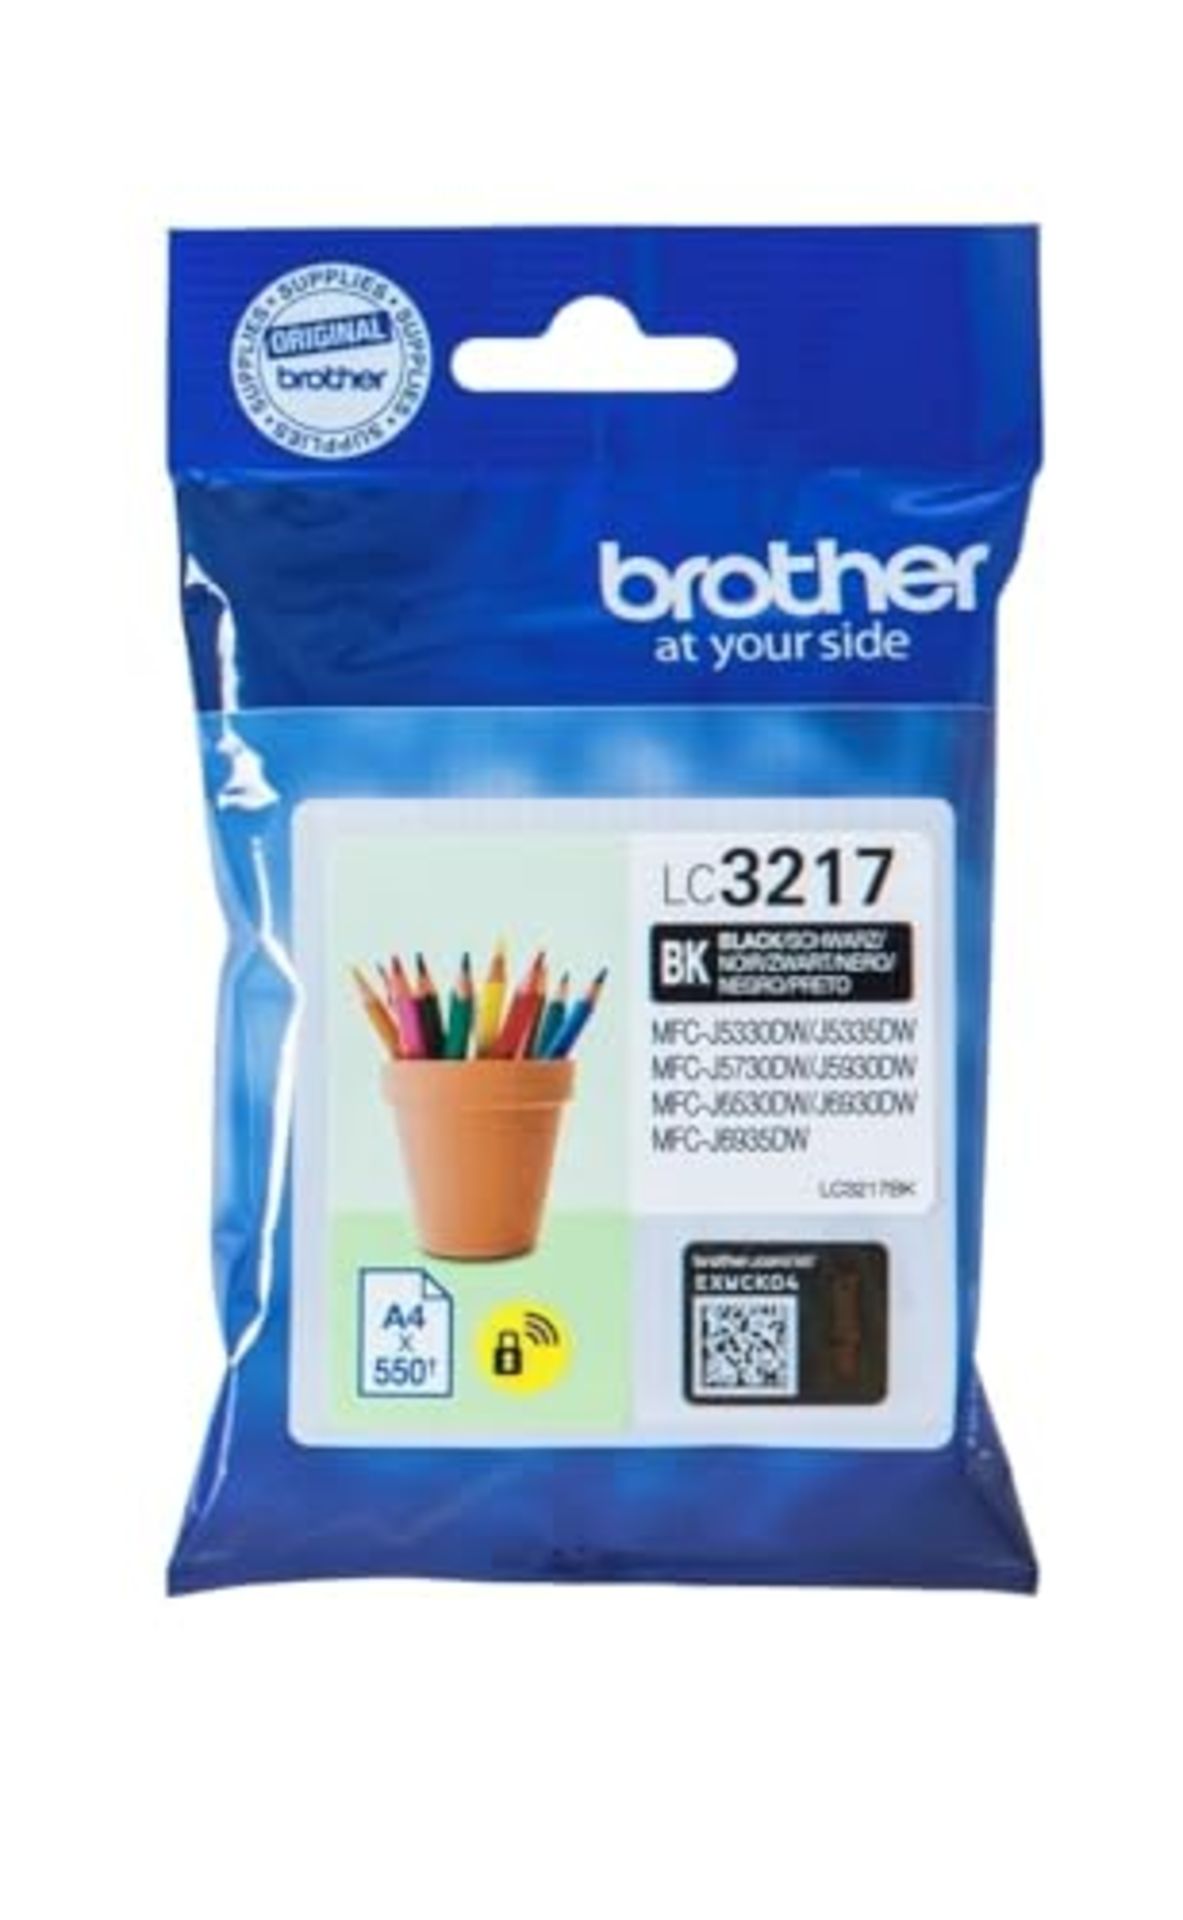 Brother LC-3217BK Inkjet Cartridge, Black, Single Pack, Standard Yield, Includes 1 x I